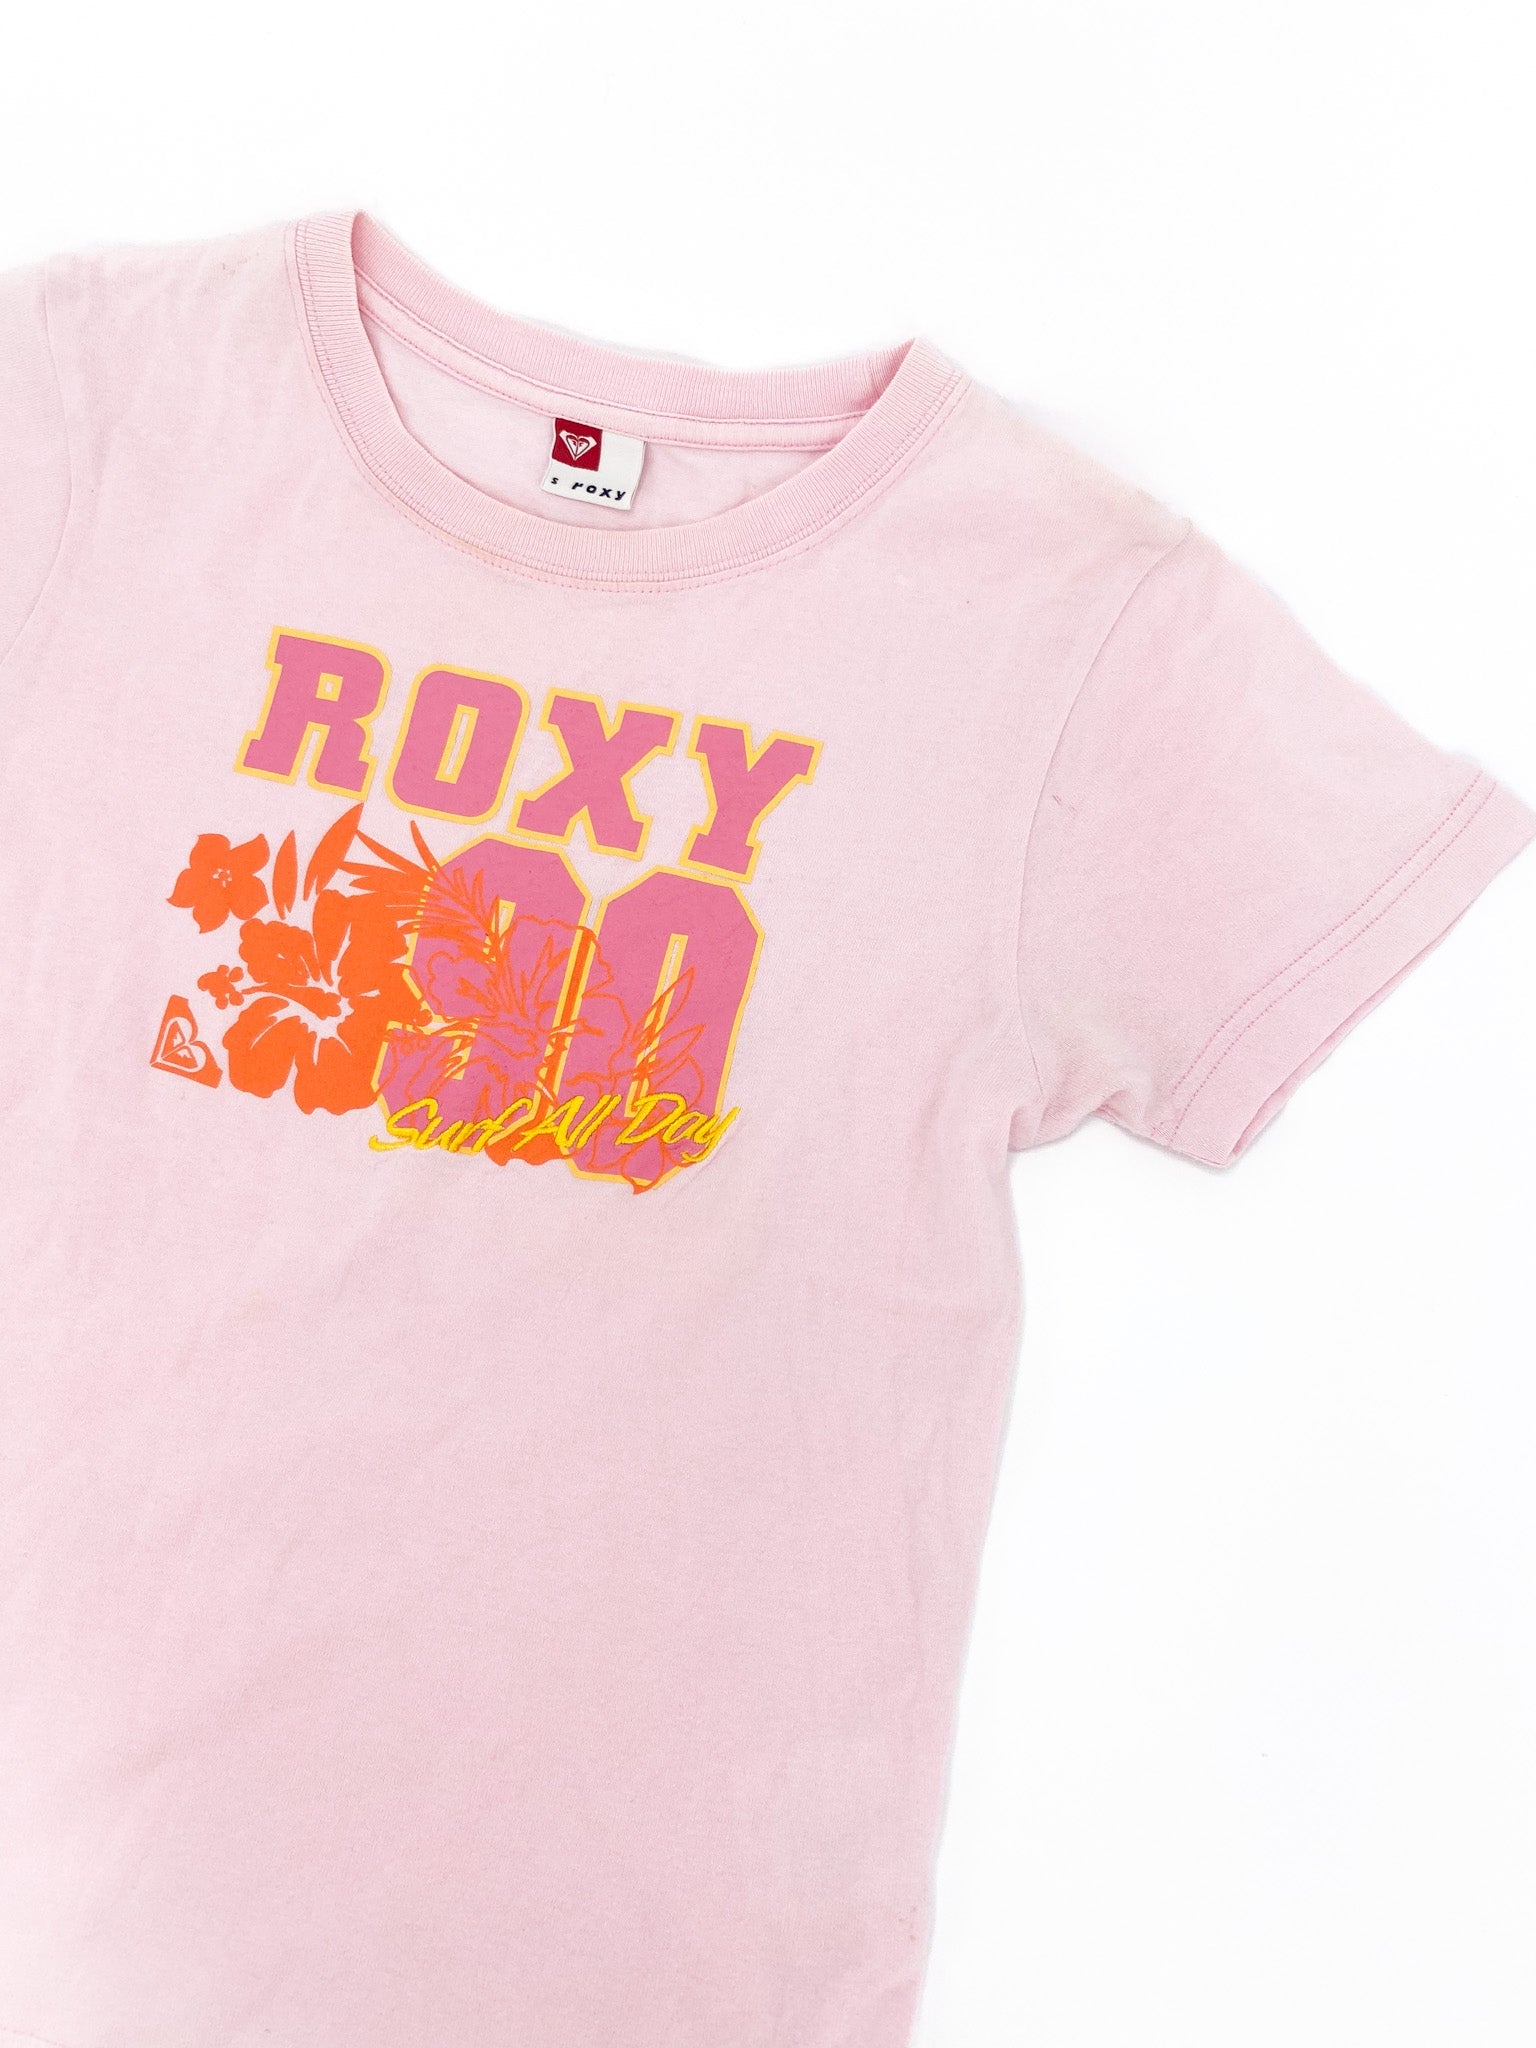 Vintage 00's Pink Roxy Top - M - Playground Vintage